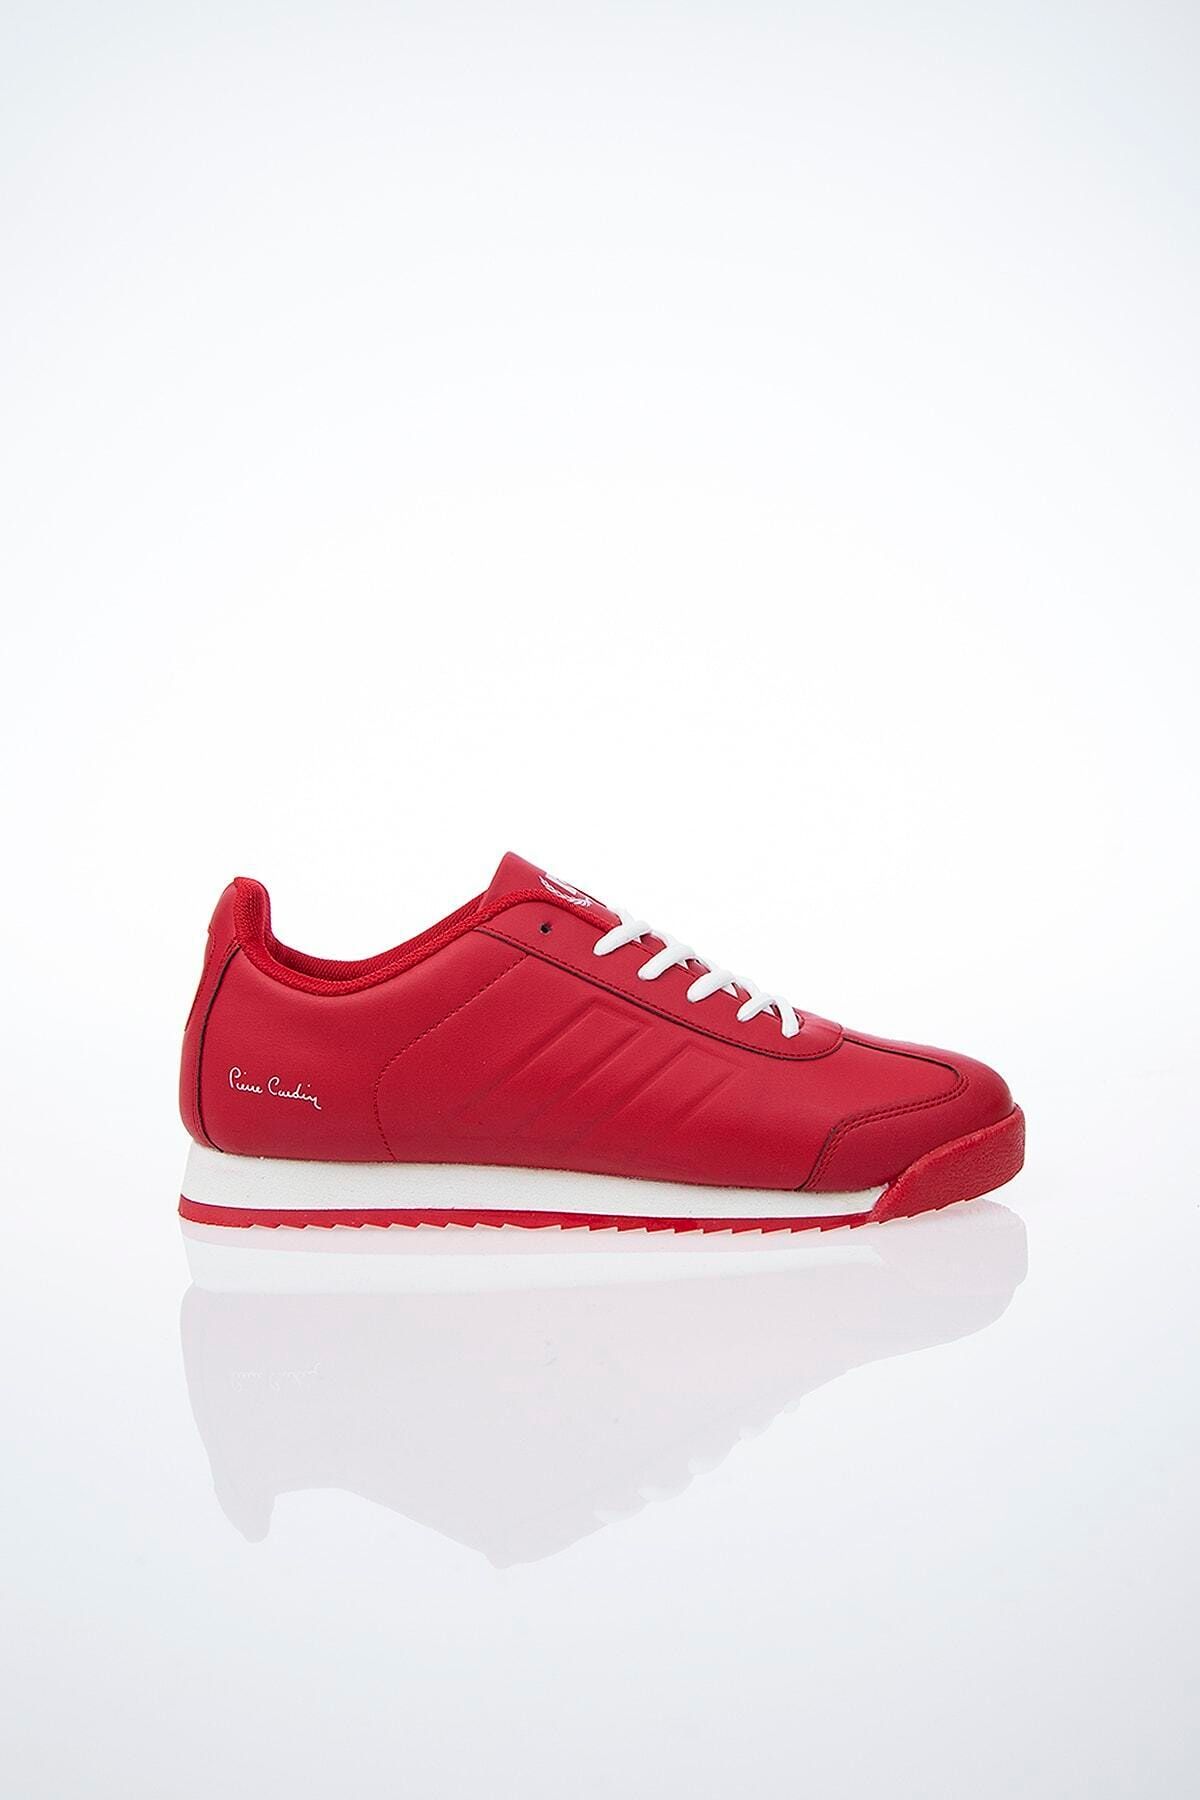 Pierre Cardin Erkek  Sneaker -Kırmızı Pc-30484 - 3319-05 Pc-30484-2637744